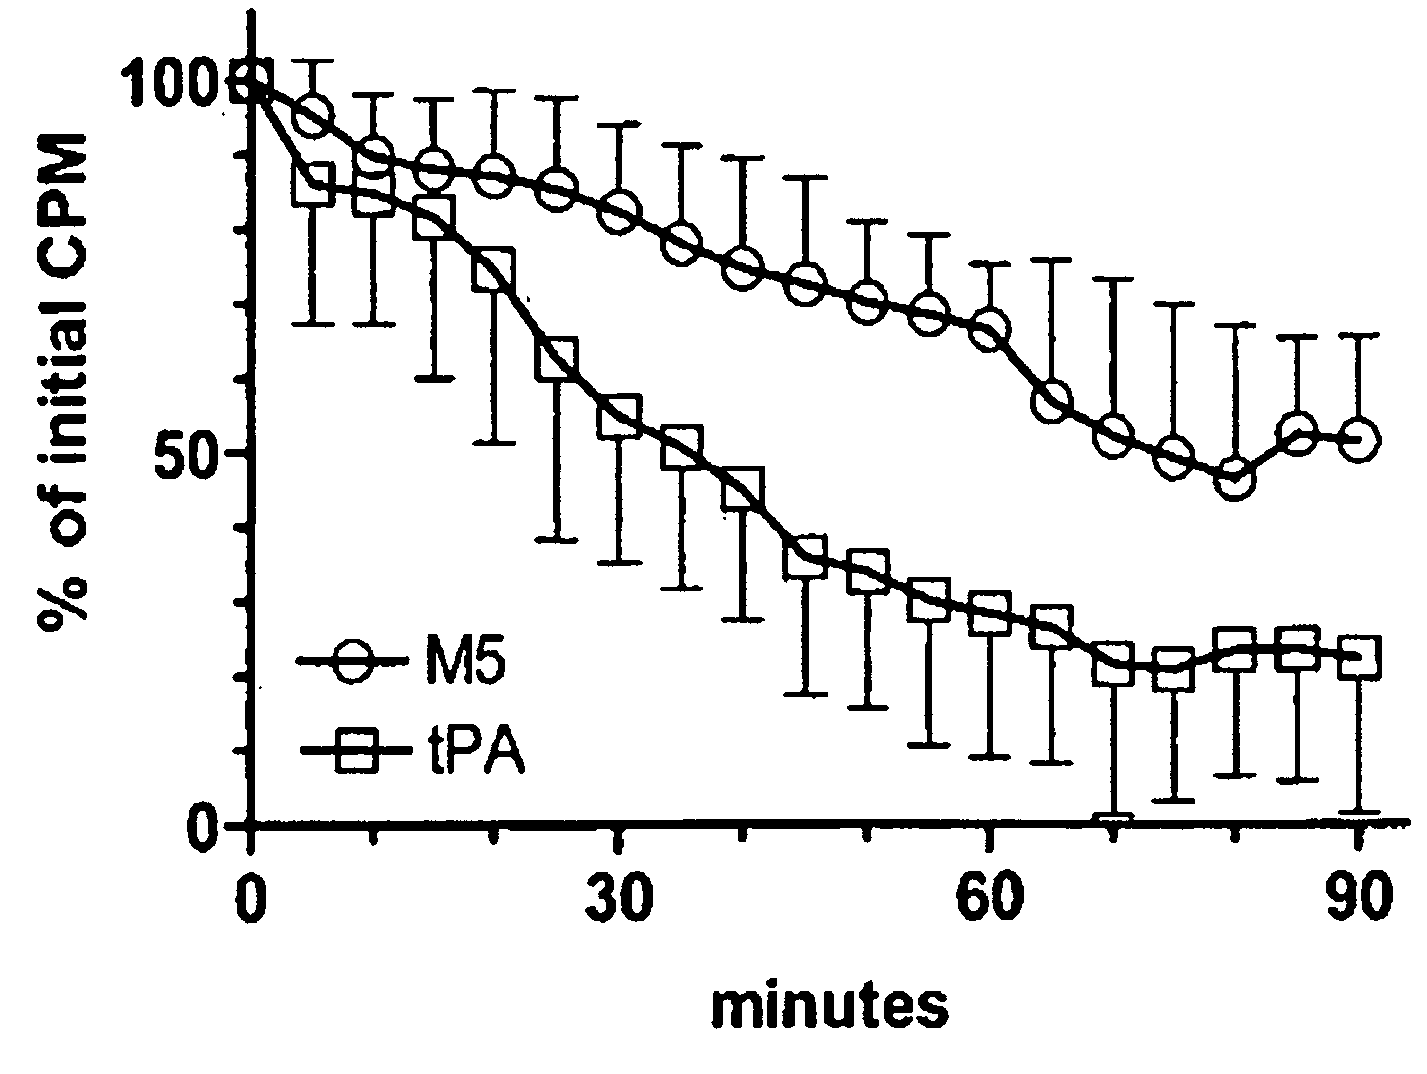 C-1 Inhibitor prevents non-specific plasminogen activation by a prourokinase mutant without impeding fibrin-specific fibrinolysis